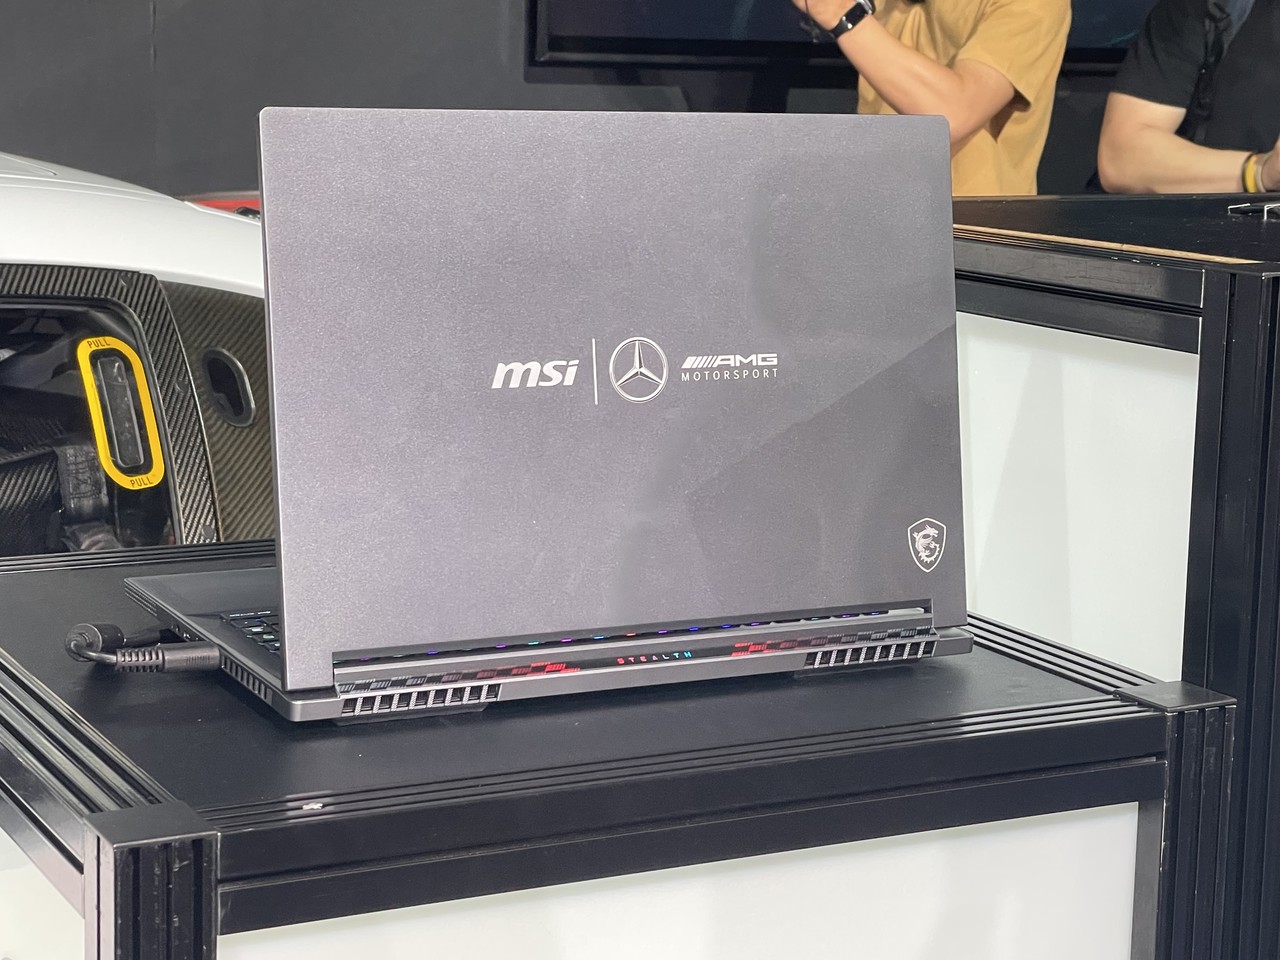 ▲ MSI와 메르세데스-AMG 모터스포츠의 로고가 새겨졌다.